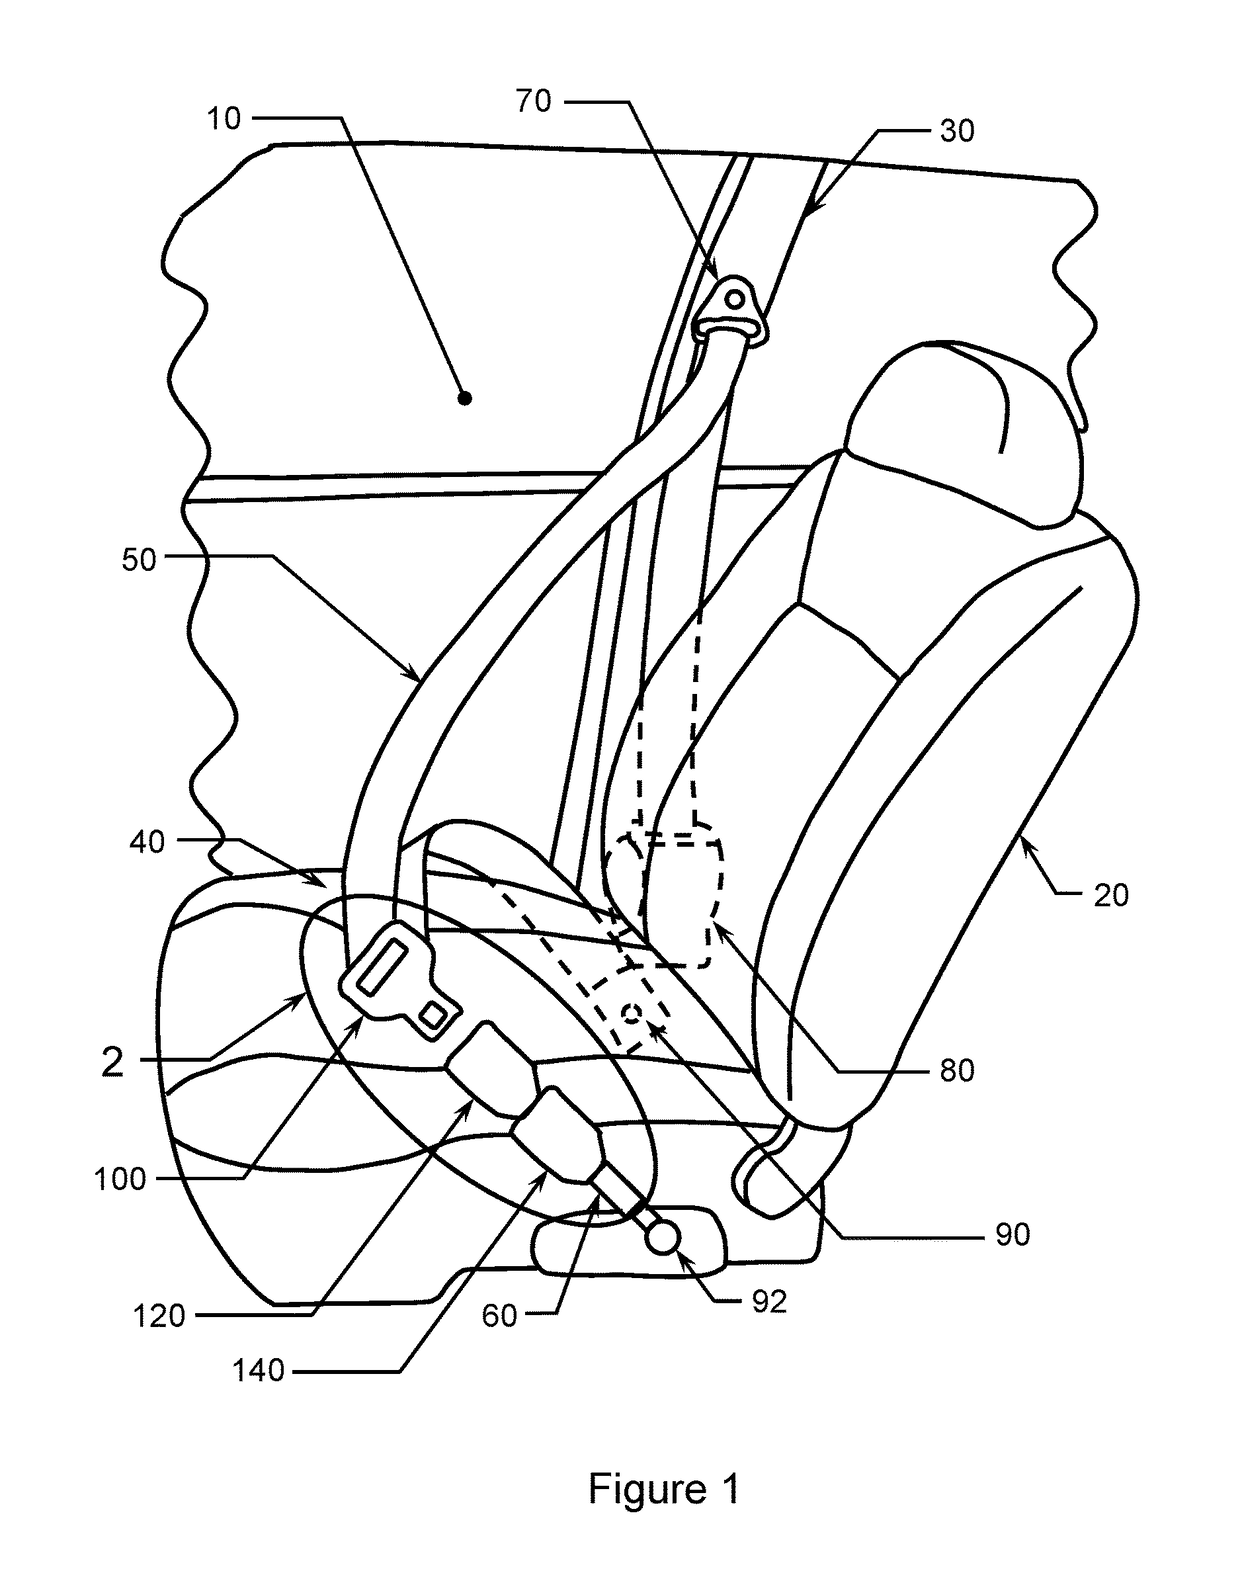 Resettable Load-Limiting Adaptive Seatbelt Apparatus